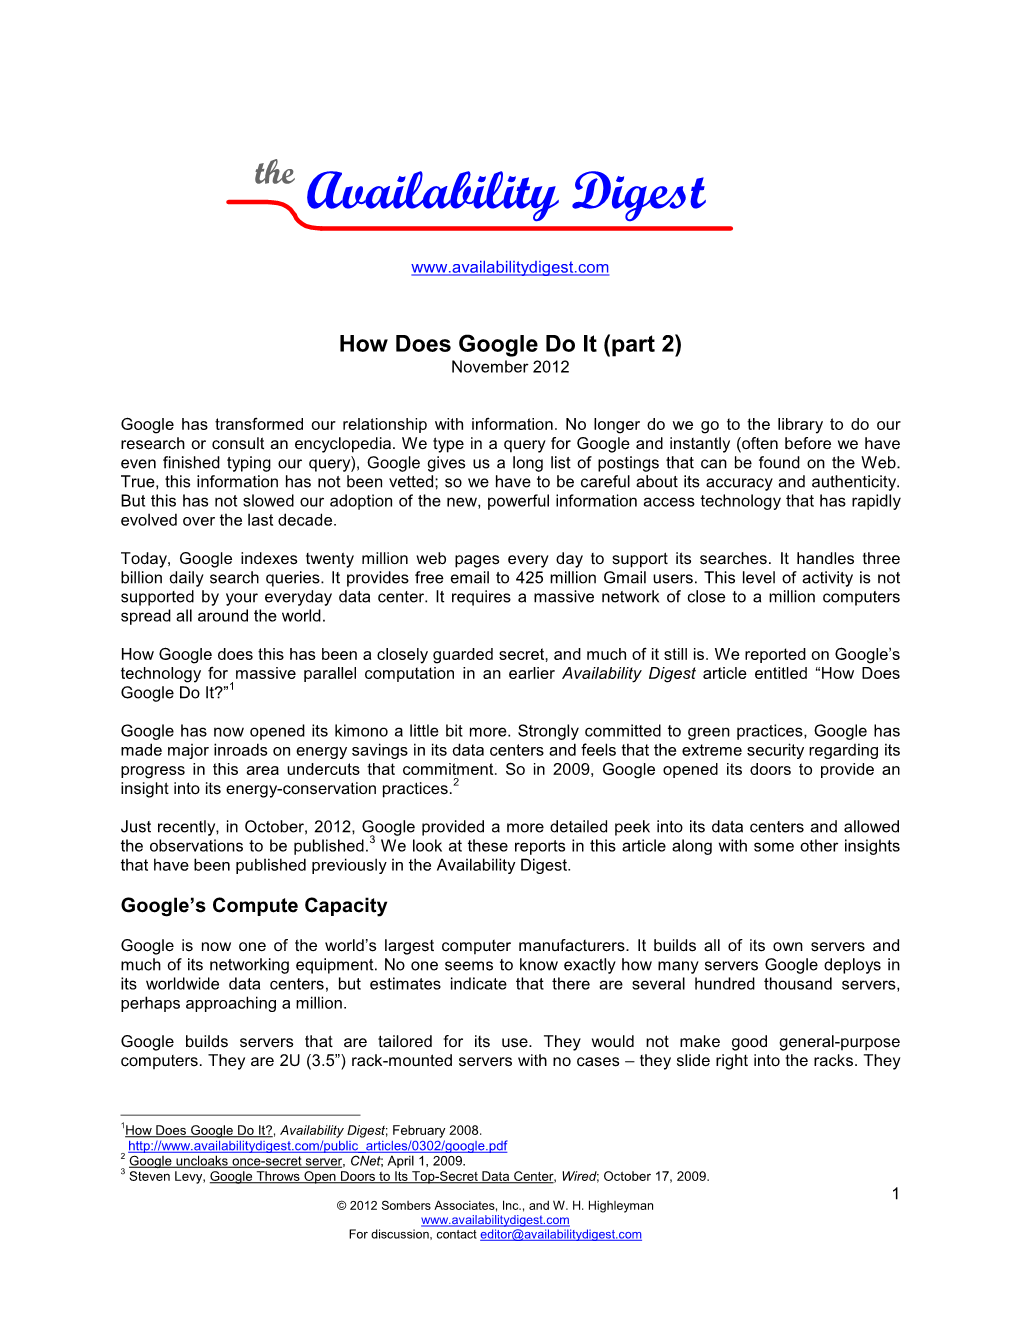 How Does Google Do It (Part 2) November 2012